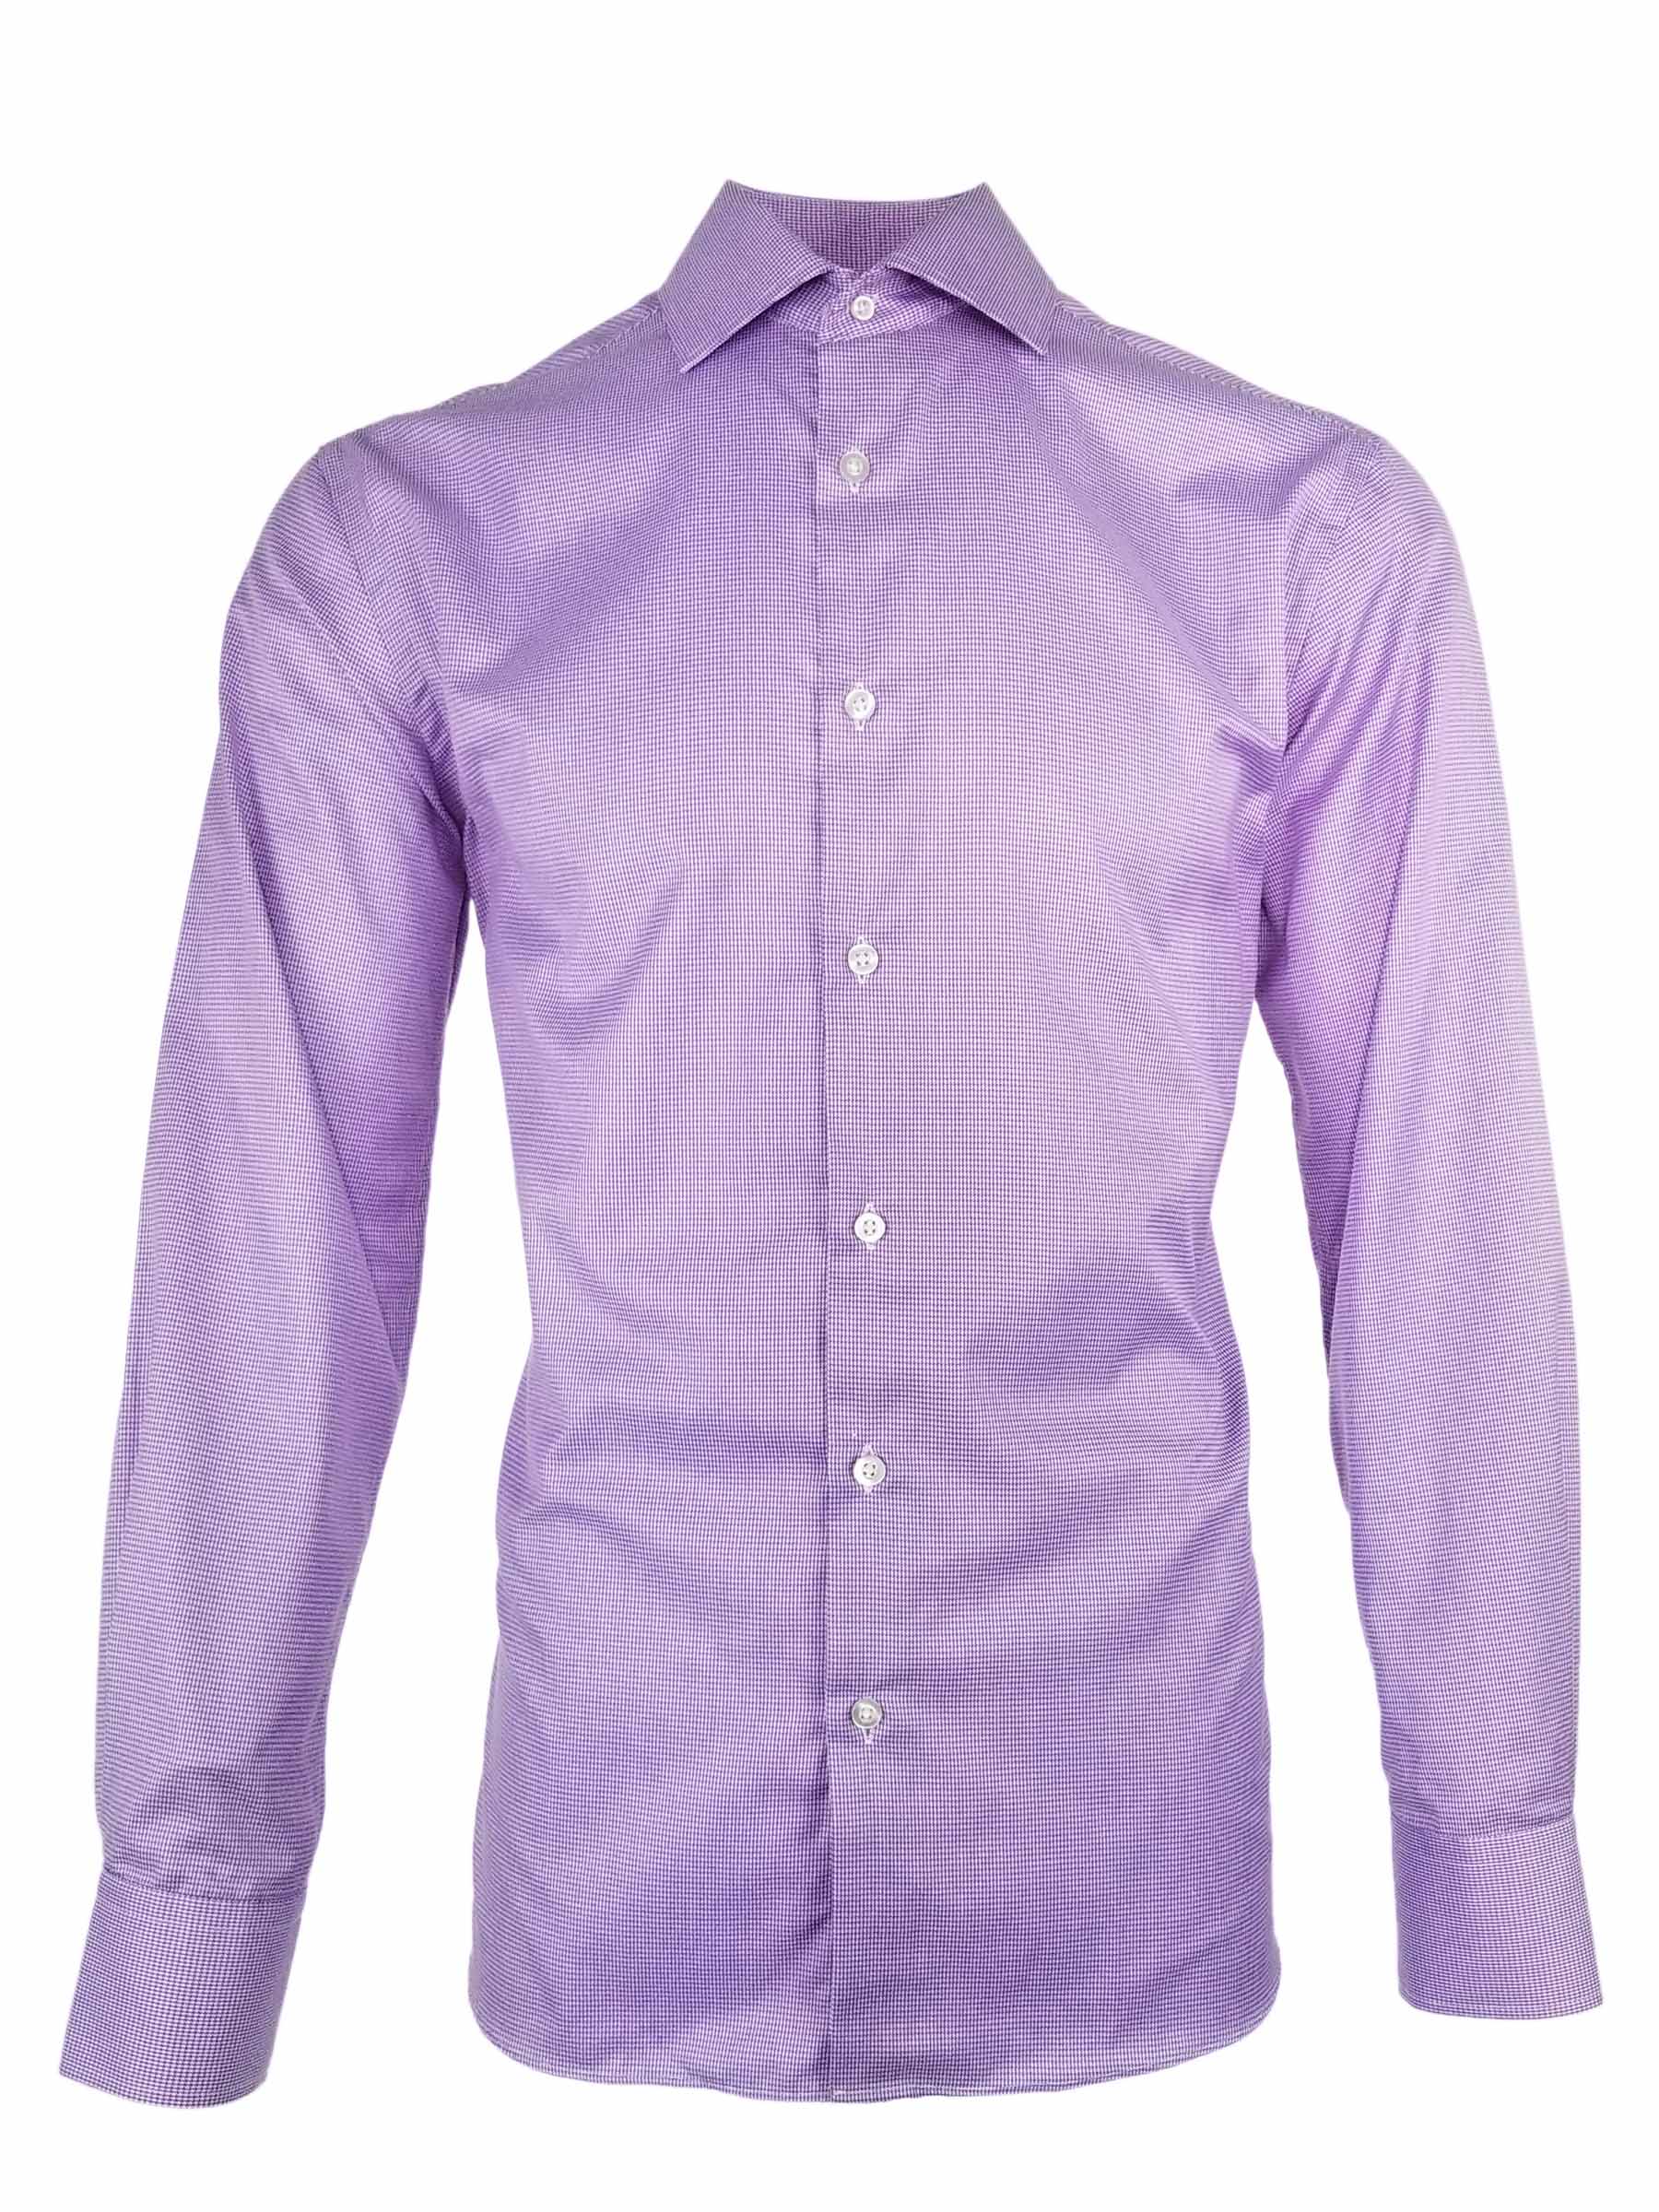 Men's Wilson Shirt - Purple Houndstooth Long Sleeve - Uniform Edit